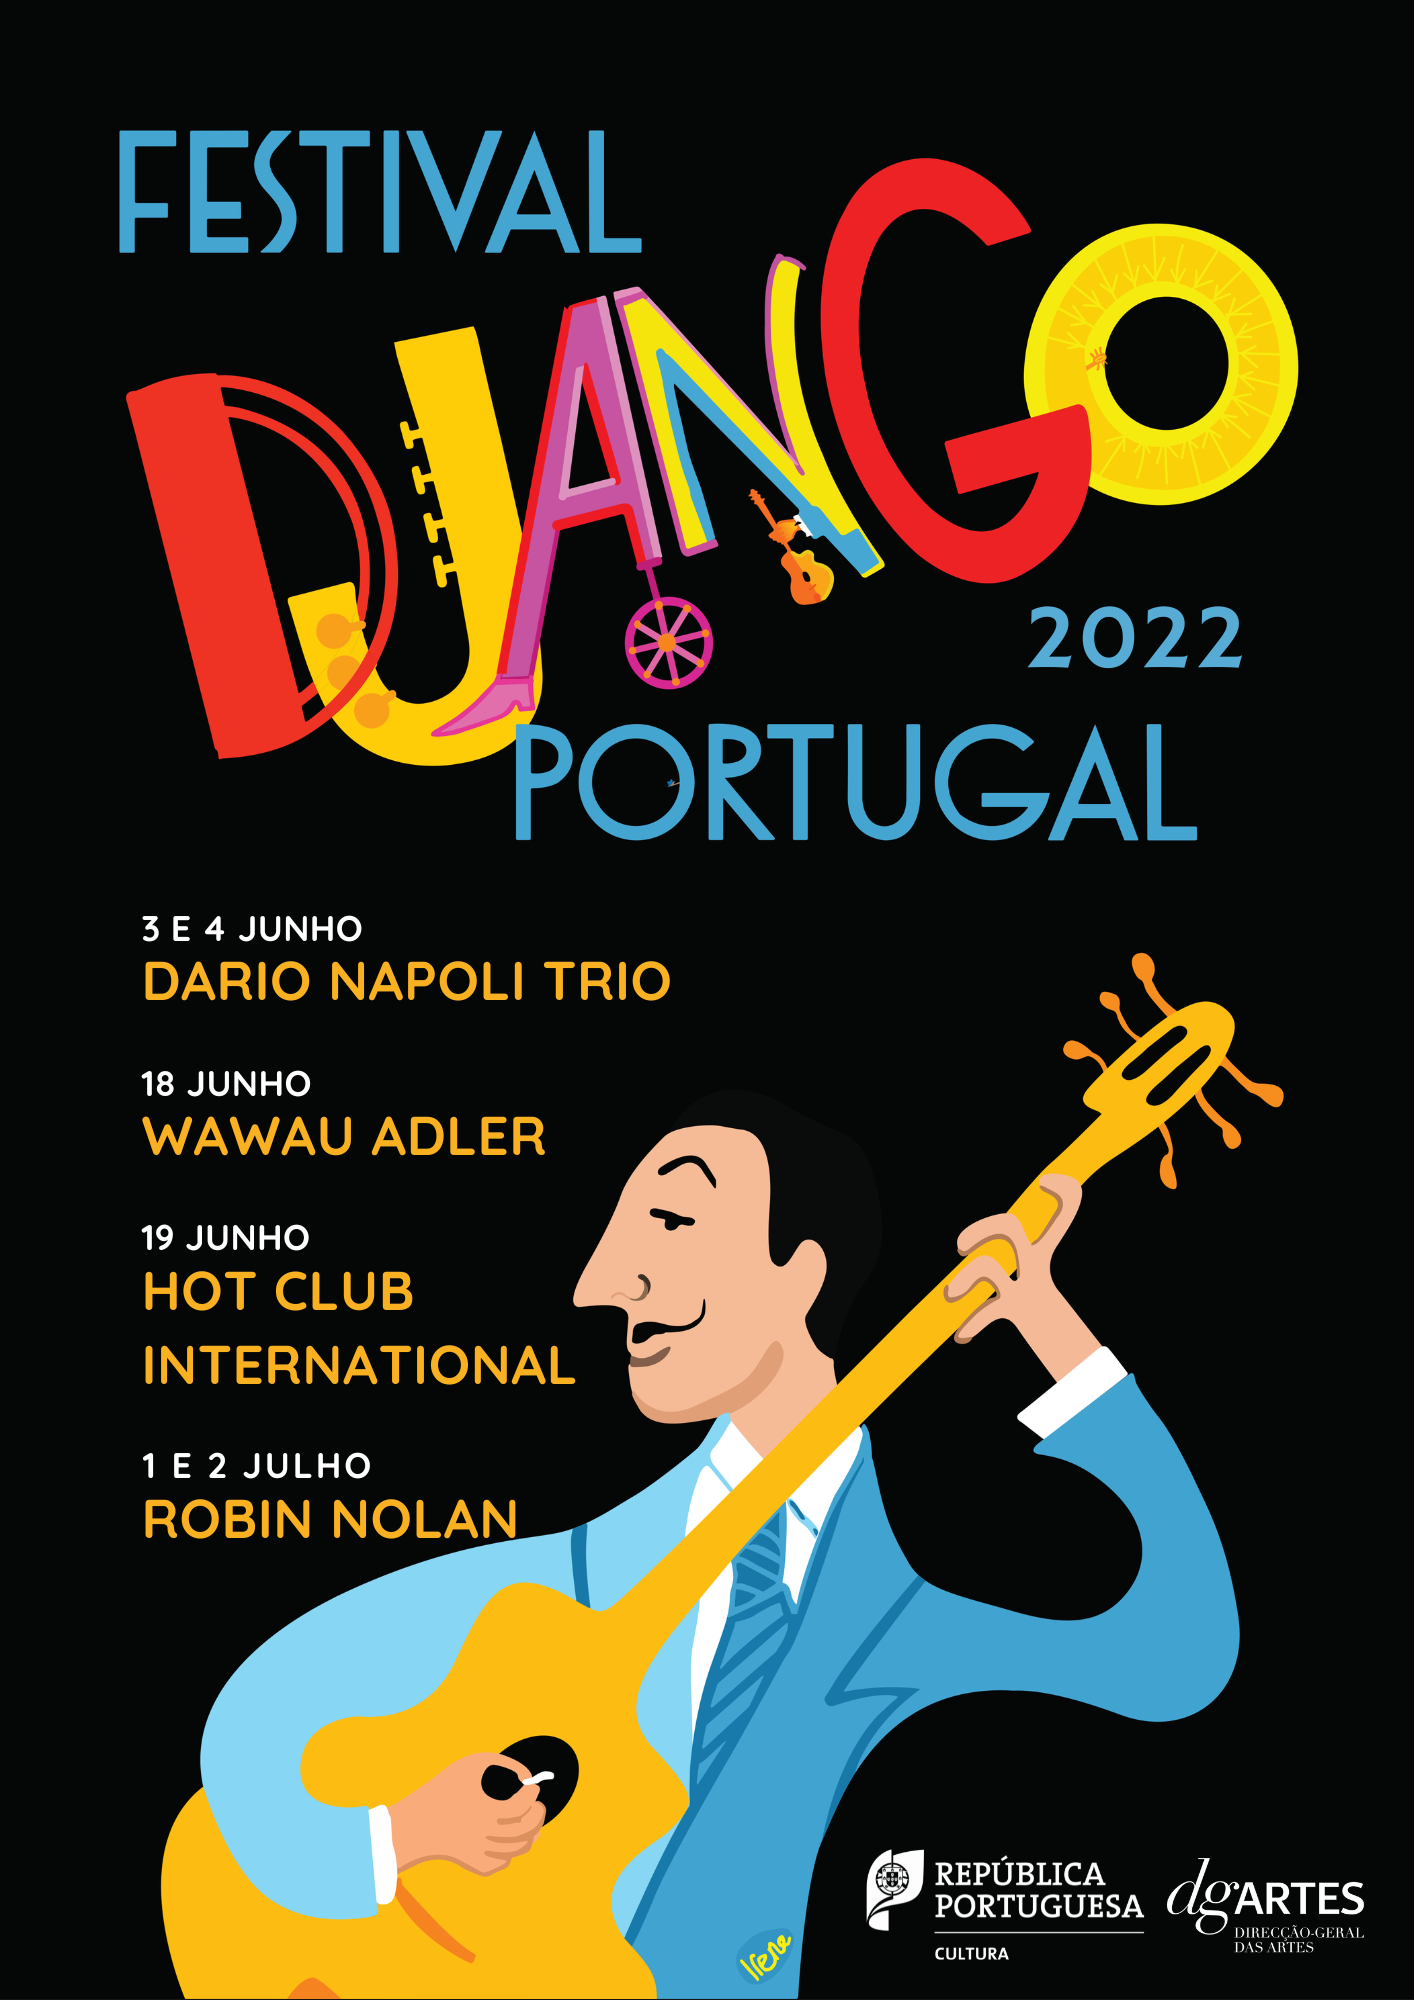 Festival Django Portugal 2022